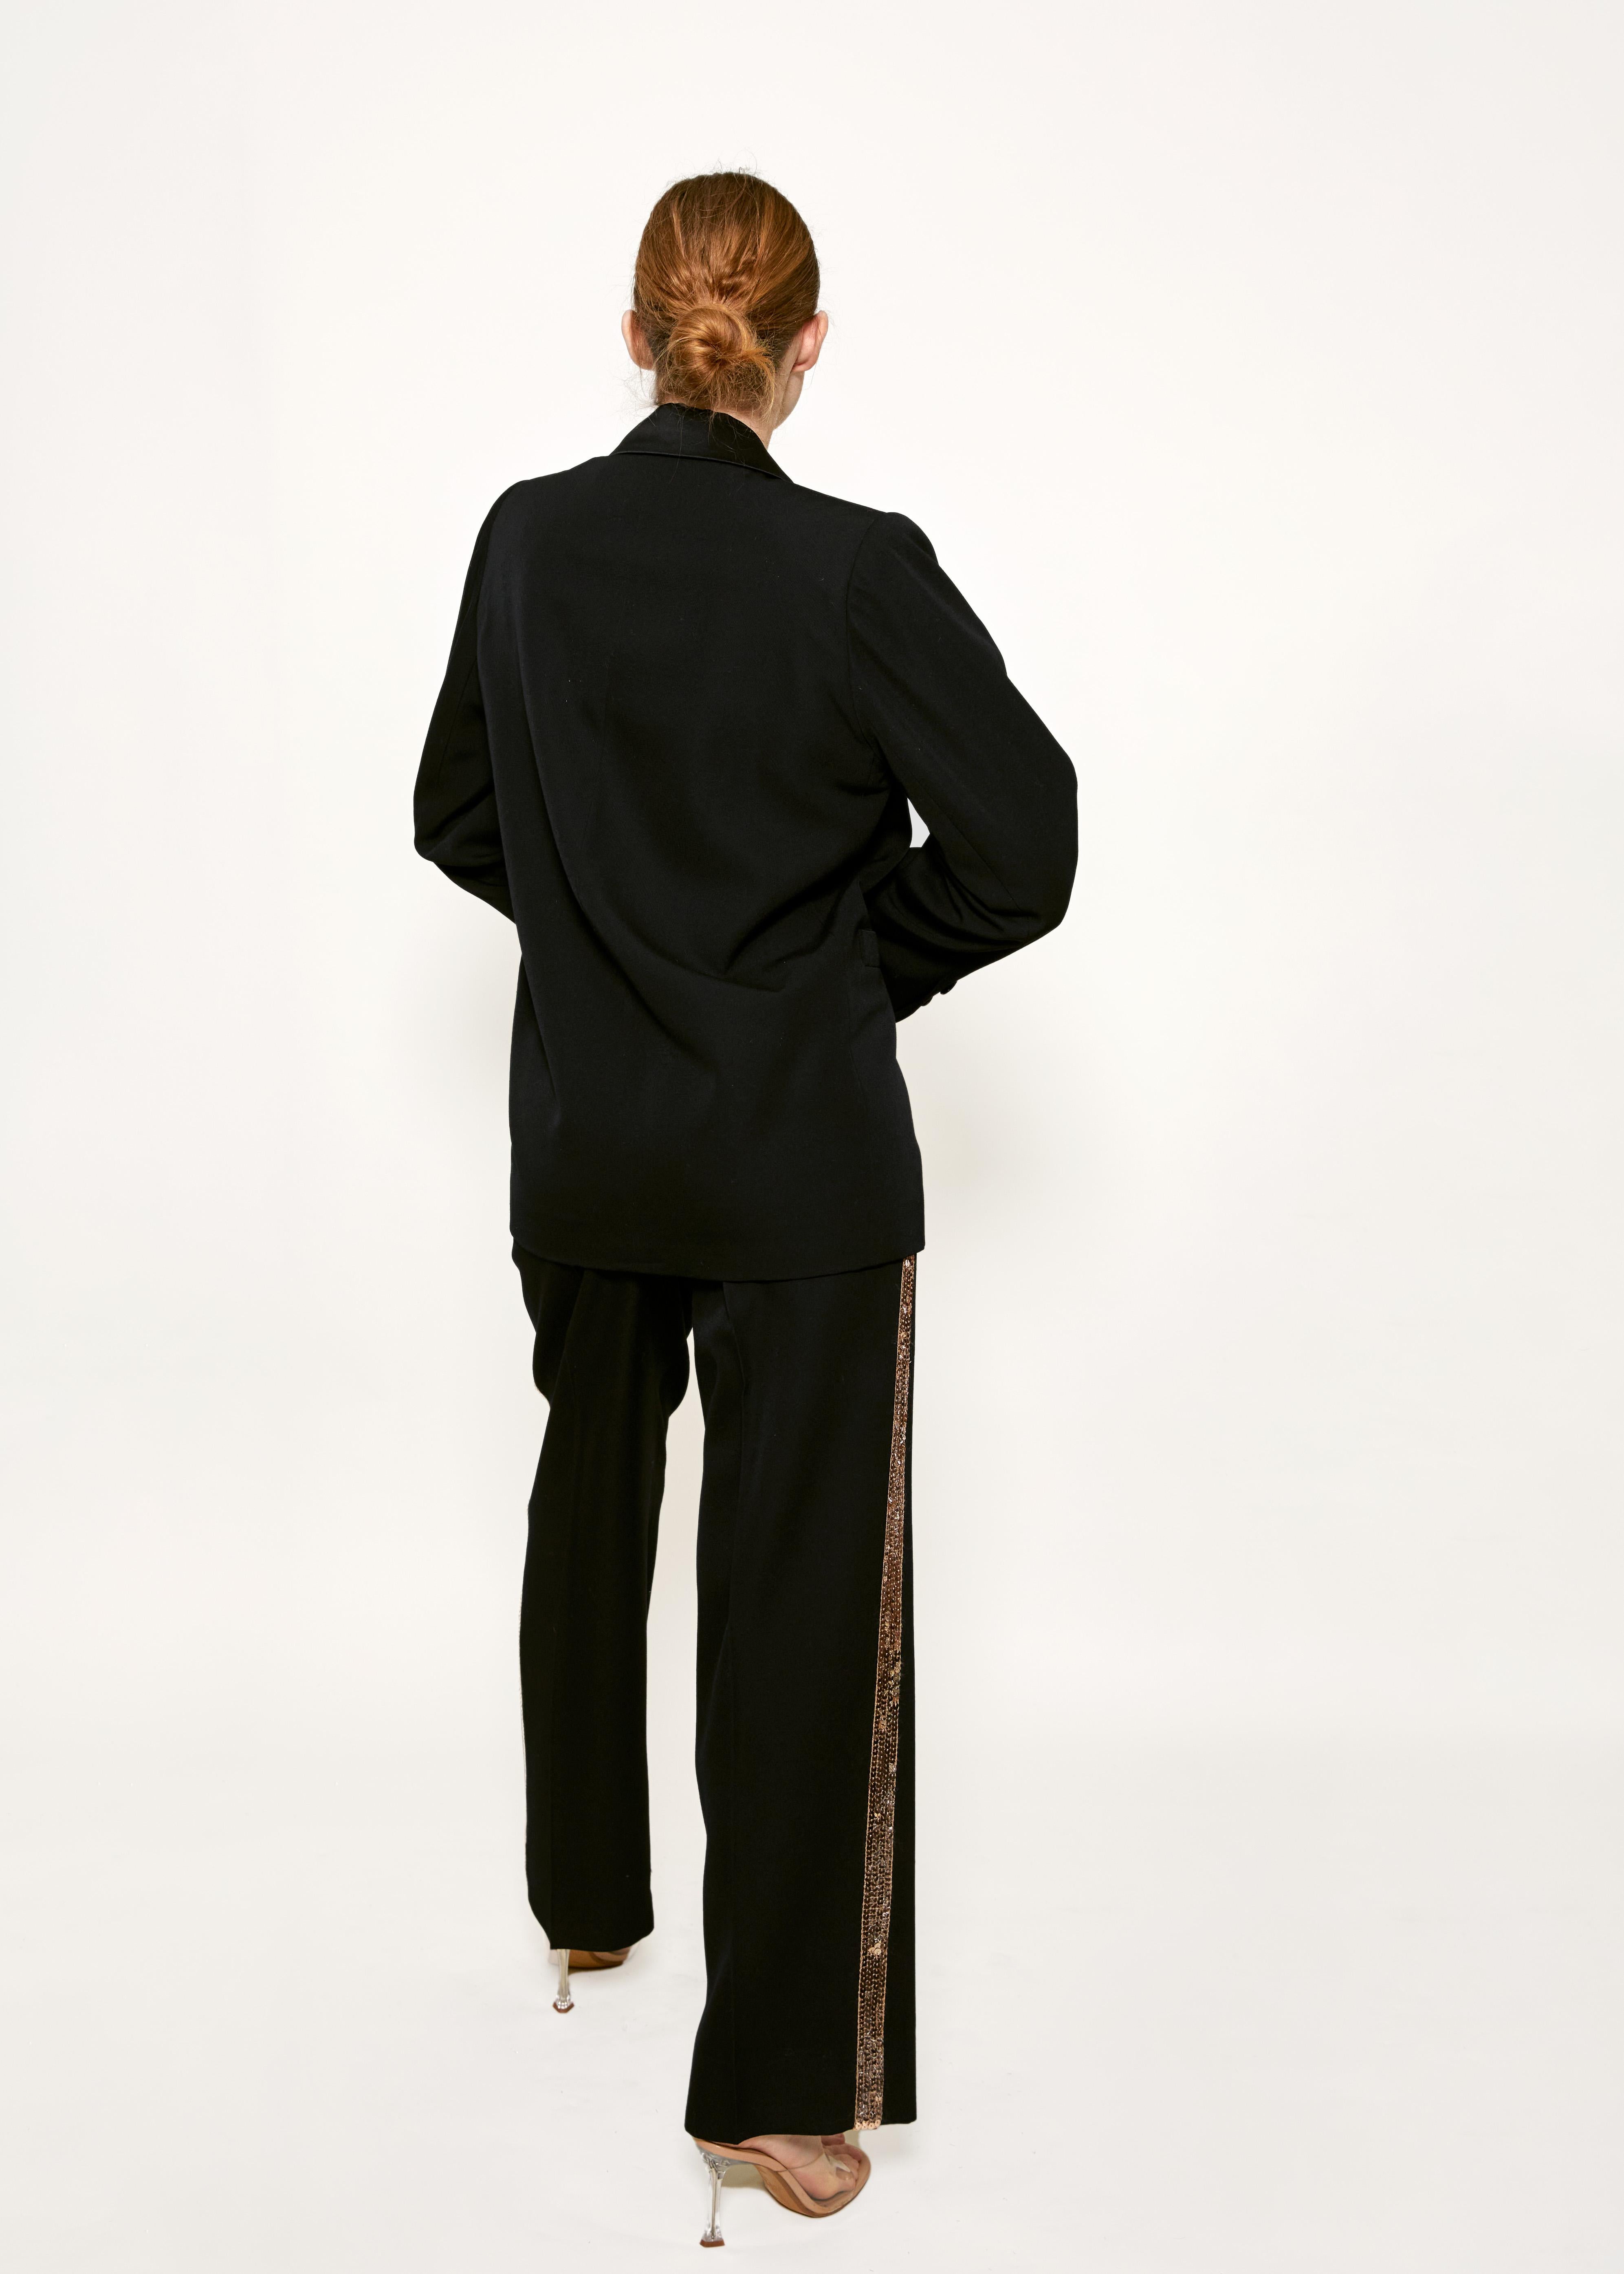 Yves Saint Laurent Tuxedo Blazer with Gold Sequin Tuxedo Stripe Pants 1